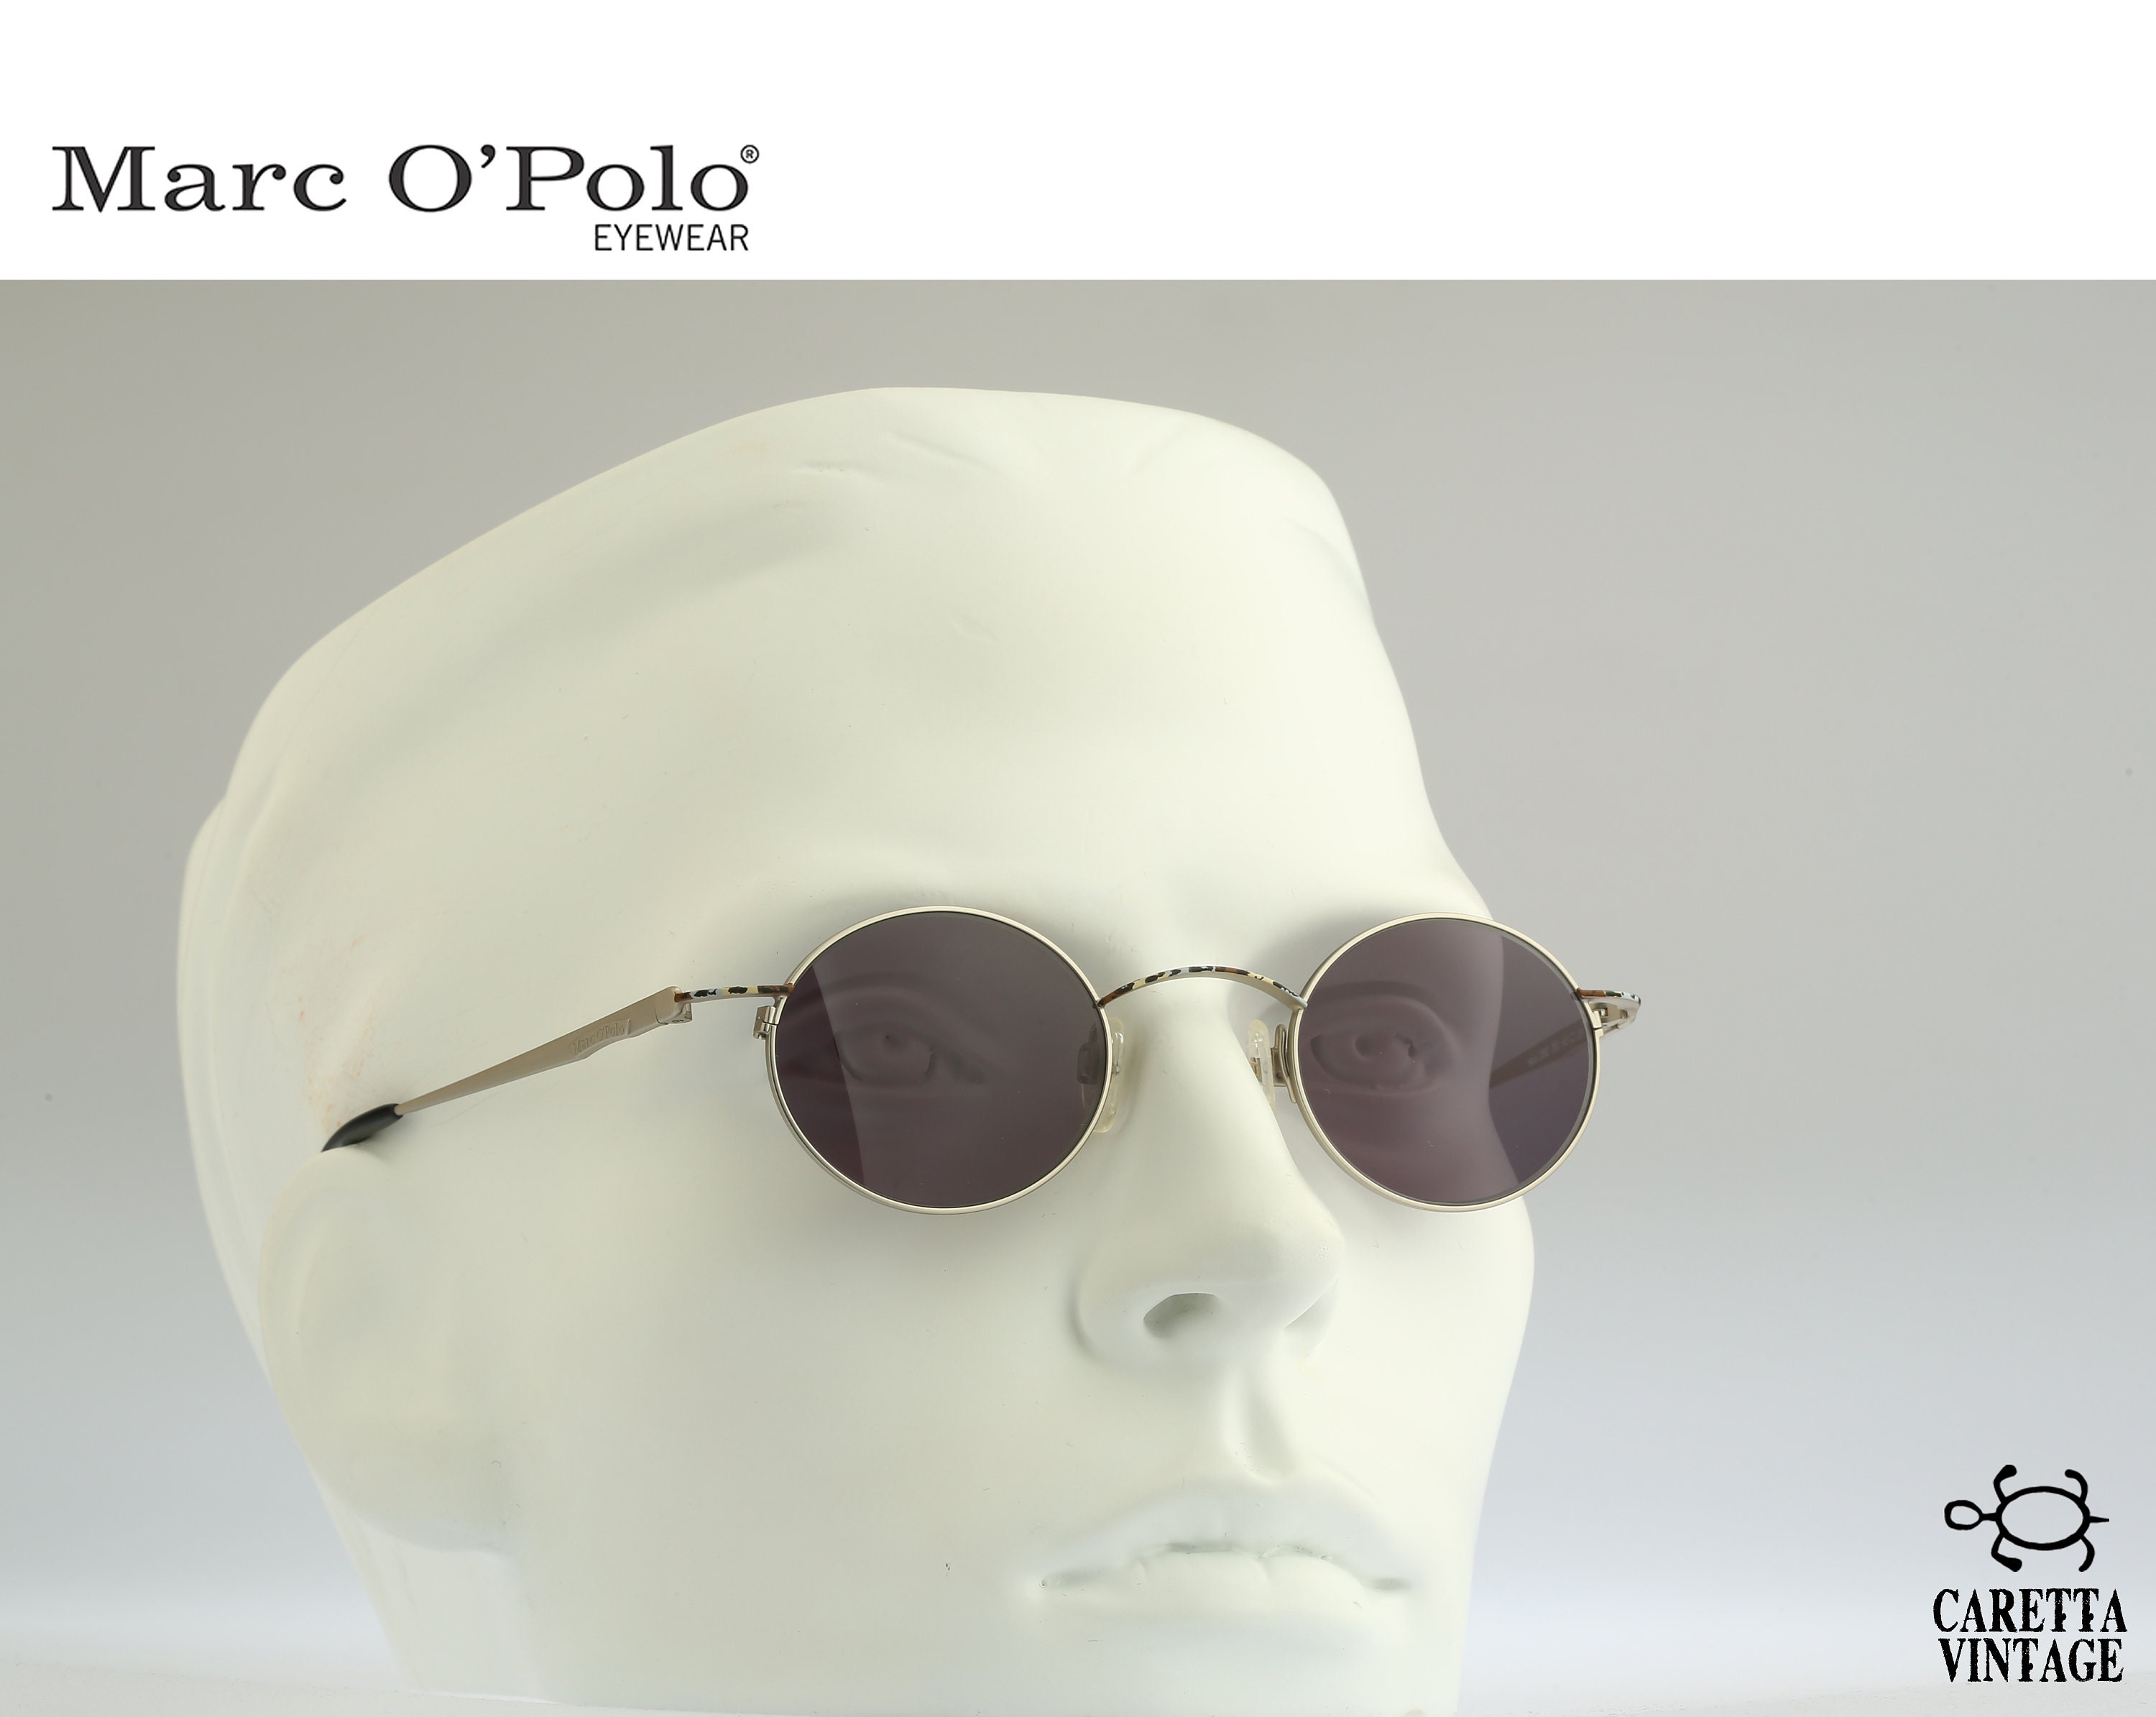 Small Circle Sunglasses Men, Marc O'polo by Metzler 3382 350